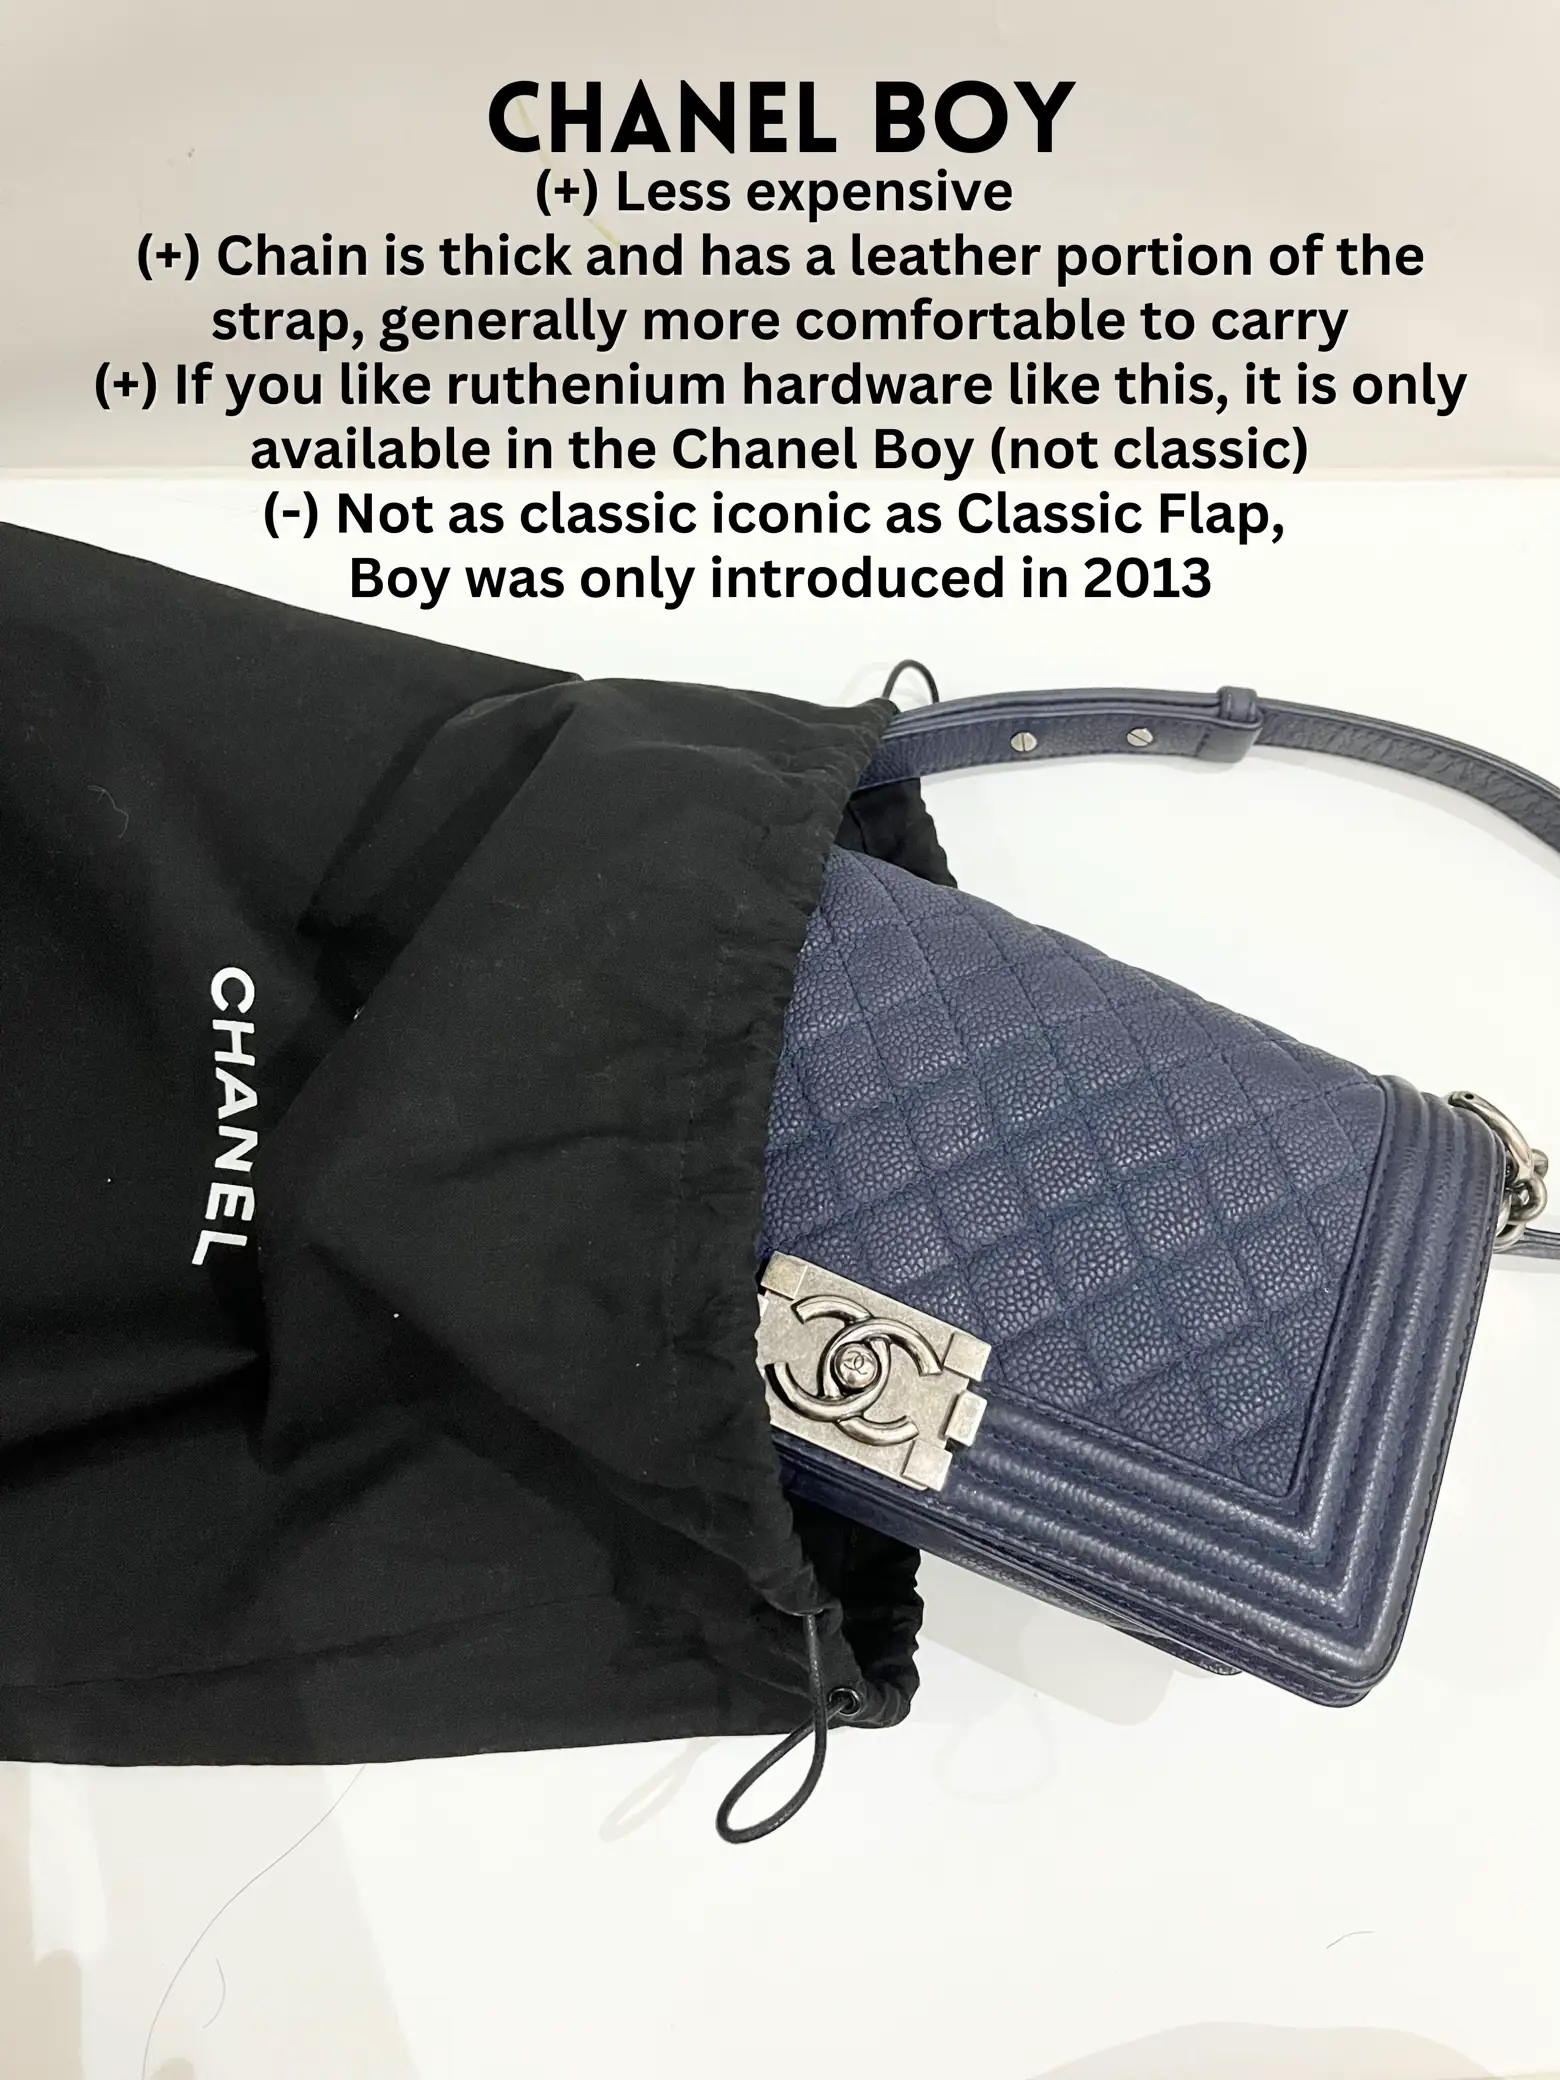 Battle of the Bags: Chanel Flap vs. Chanel Boy